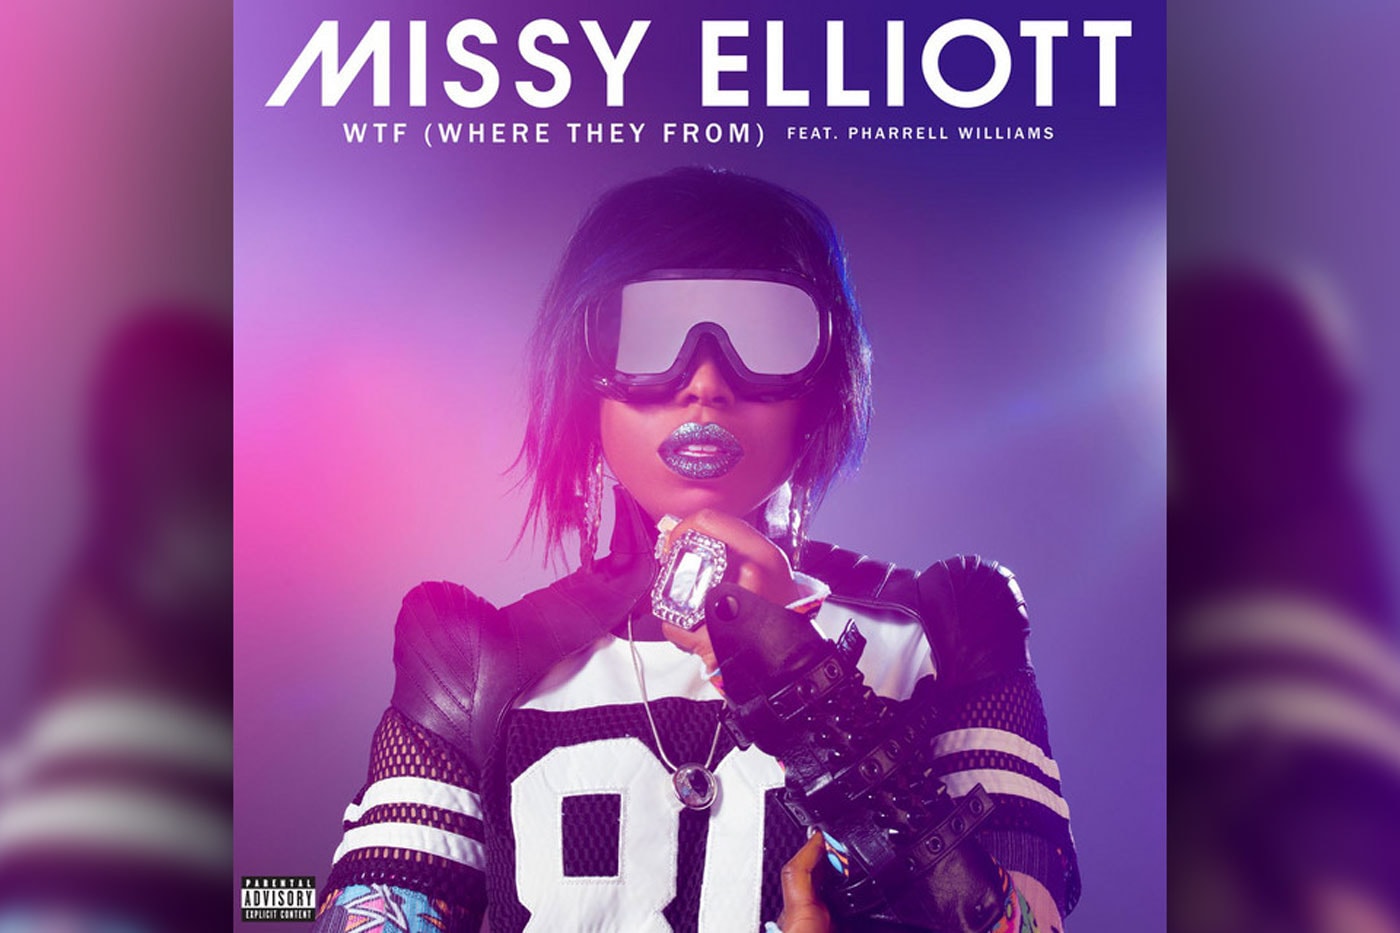 Listen to a Snippet of Missy Elliott & Pharrell's "WTF"